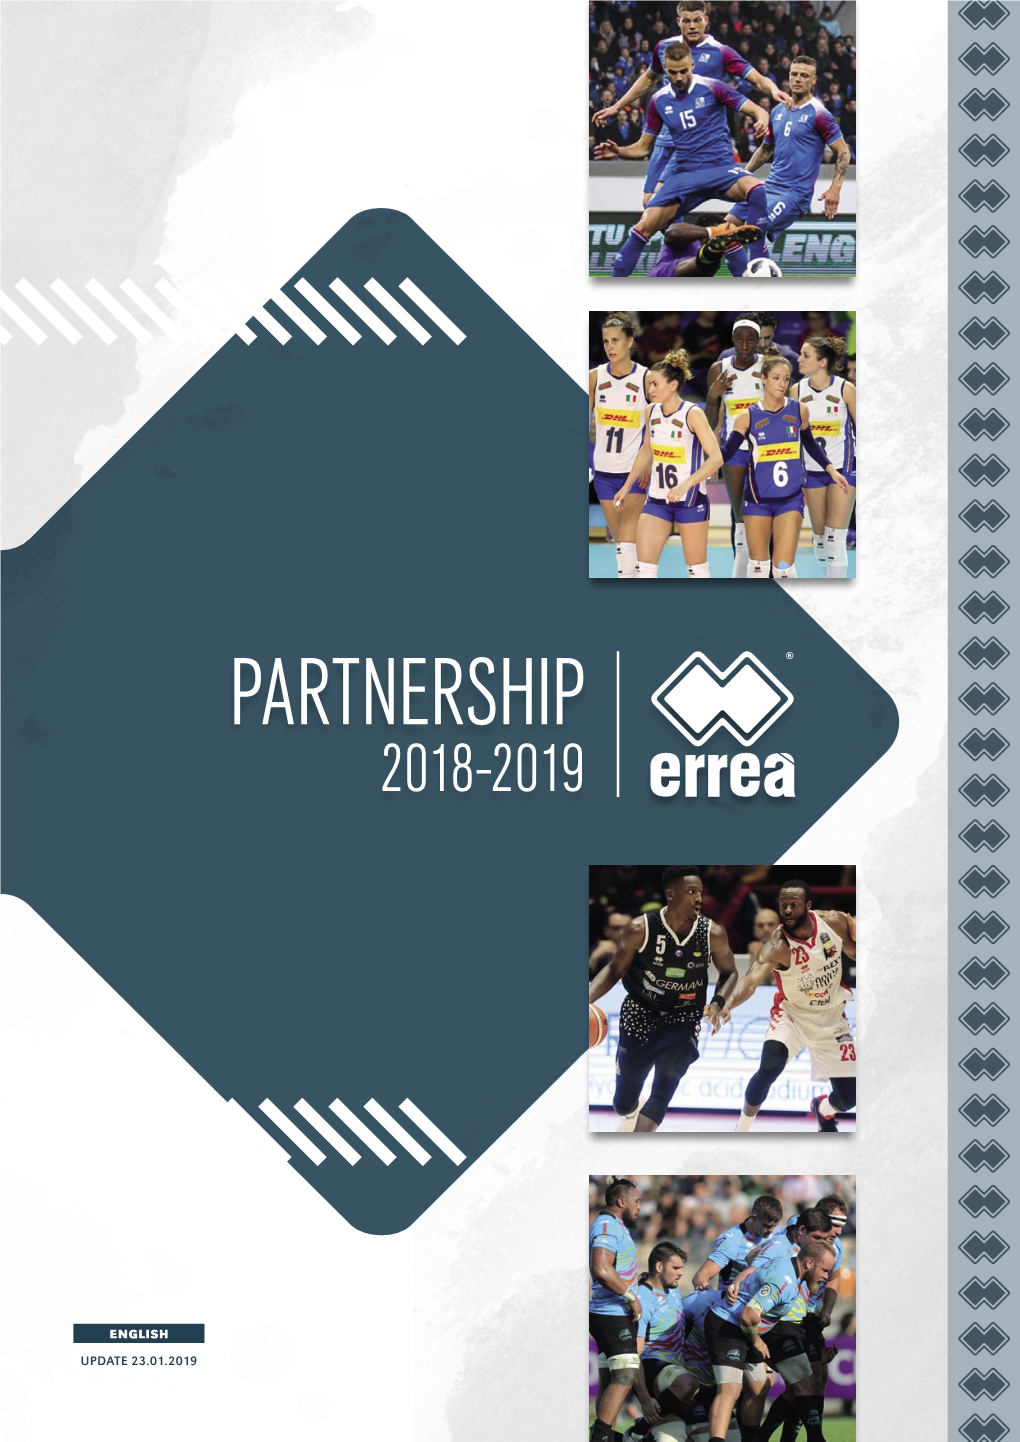 Partnership 2018-2019